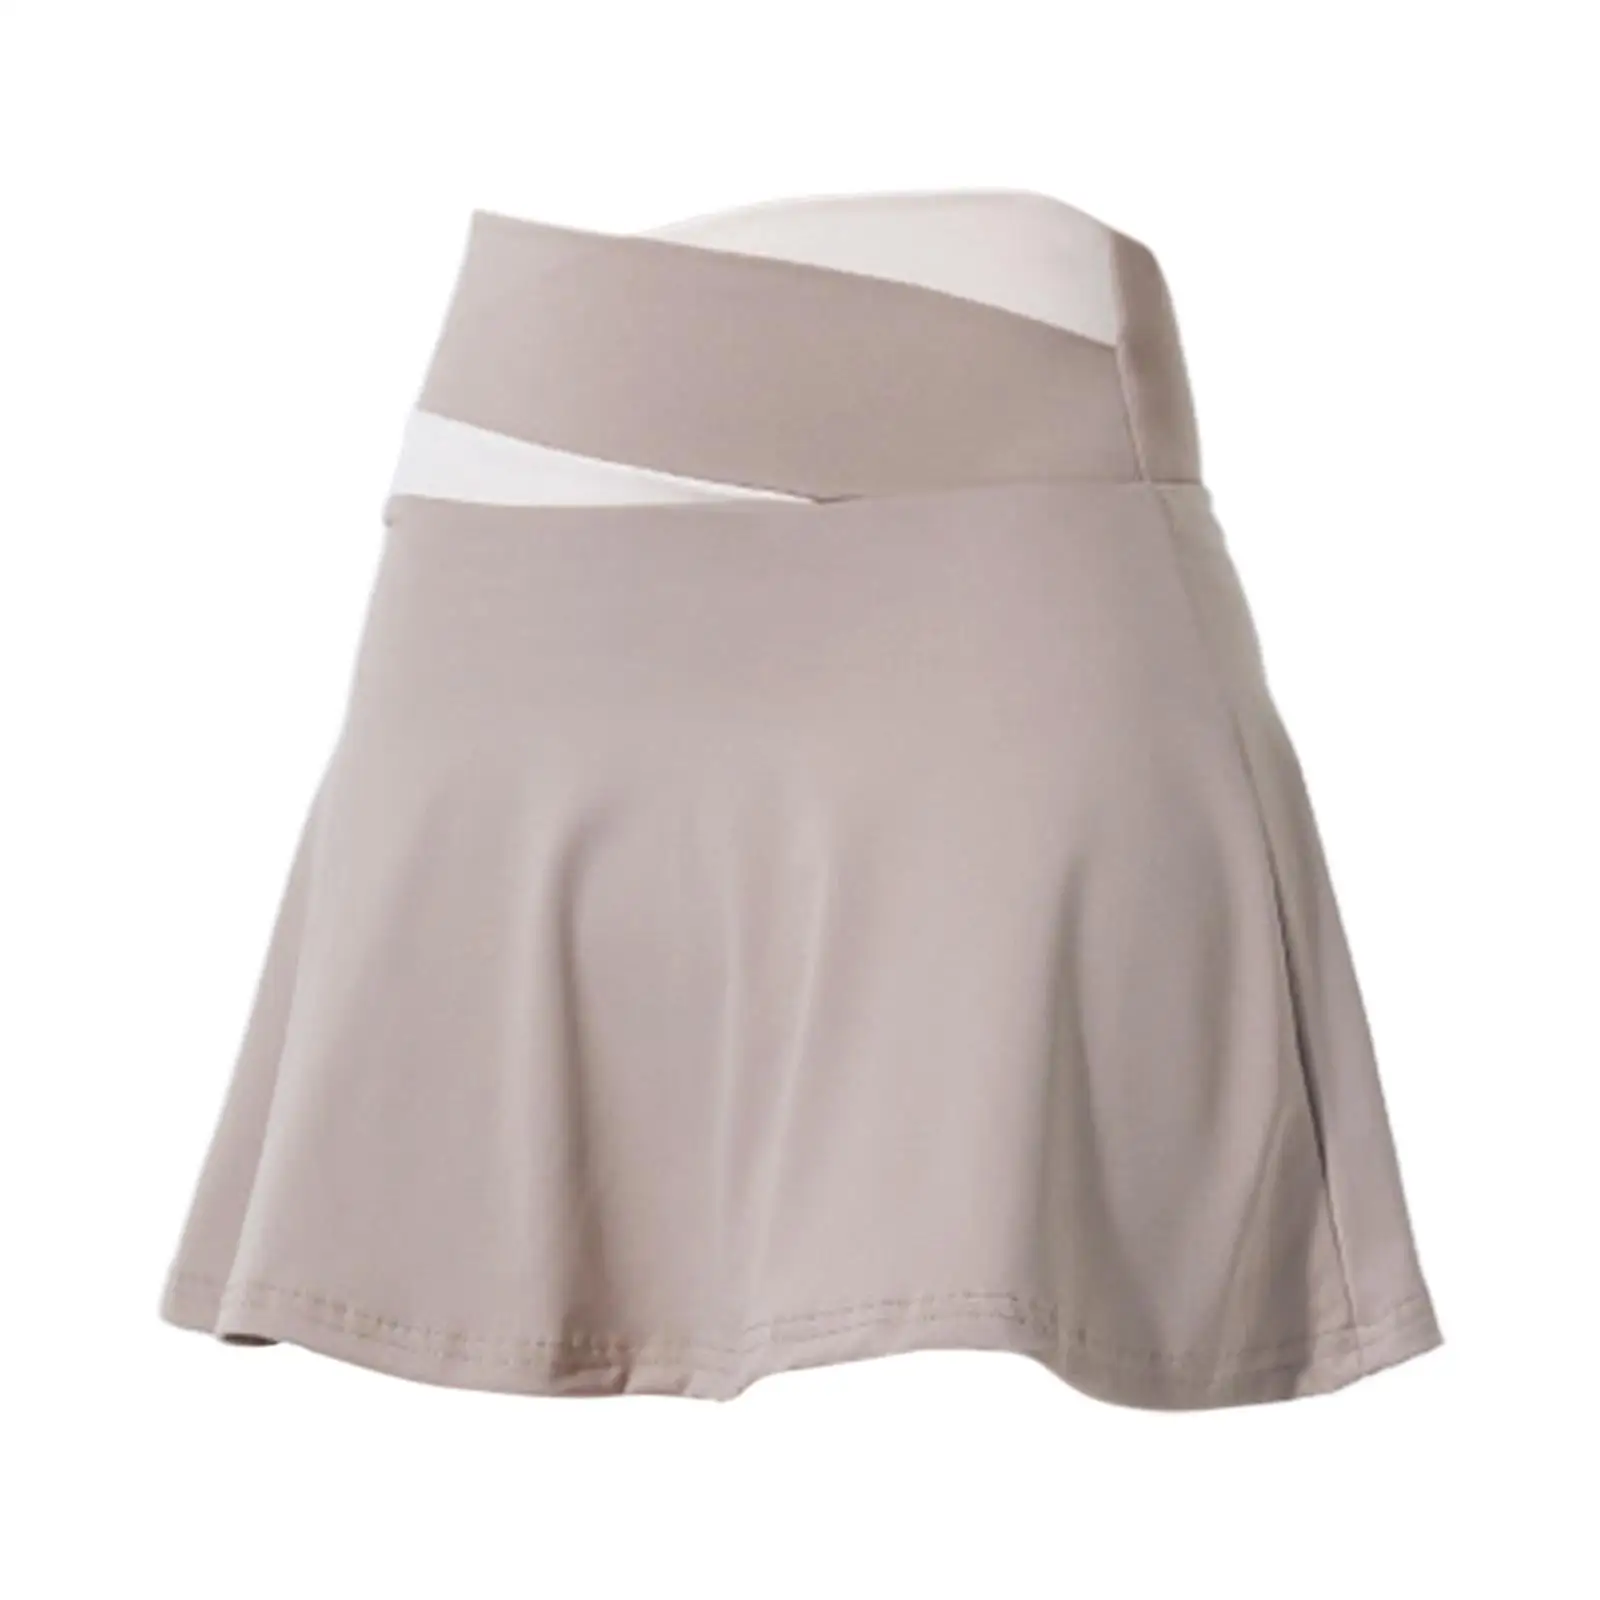 Tennis Skirts Short Skirts Soft Activewear Casual Mini Skirt Gymwear Golf Skorts Skirt for Running Home Fitness Jogging Exercise